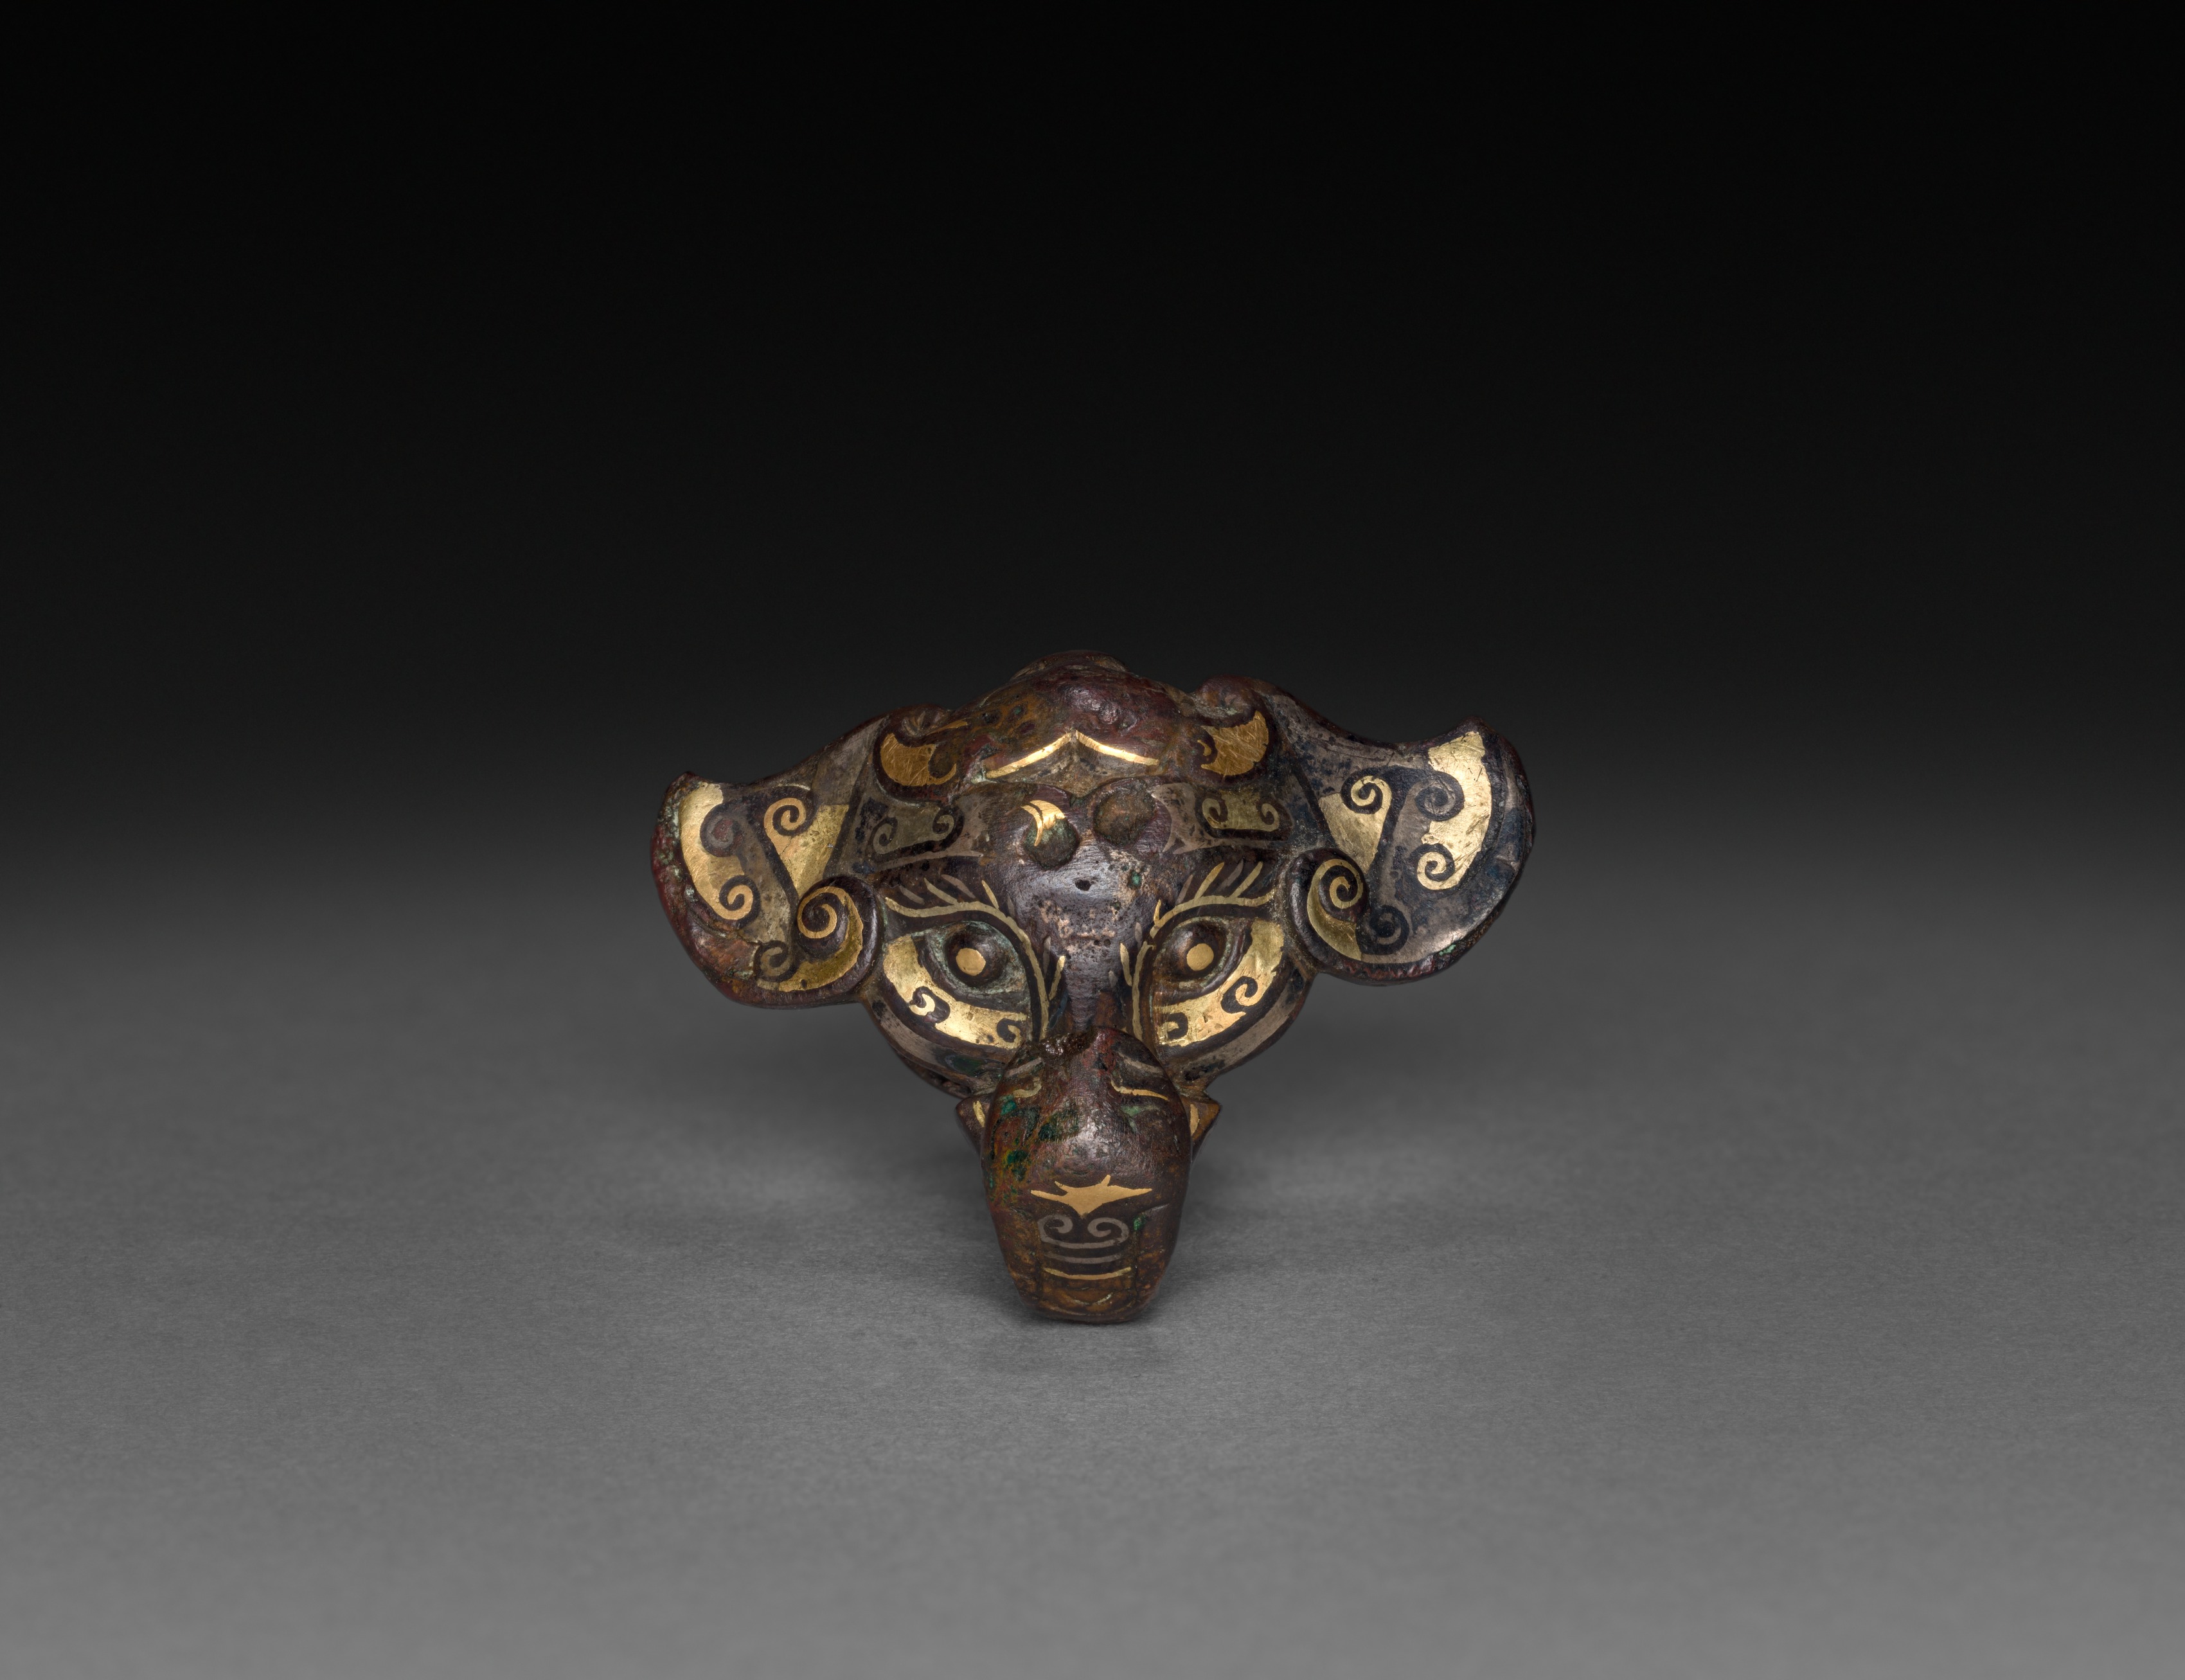 Belt Hook (Daigou) in the Form of a Buffalo or Elephant Head